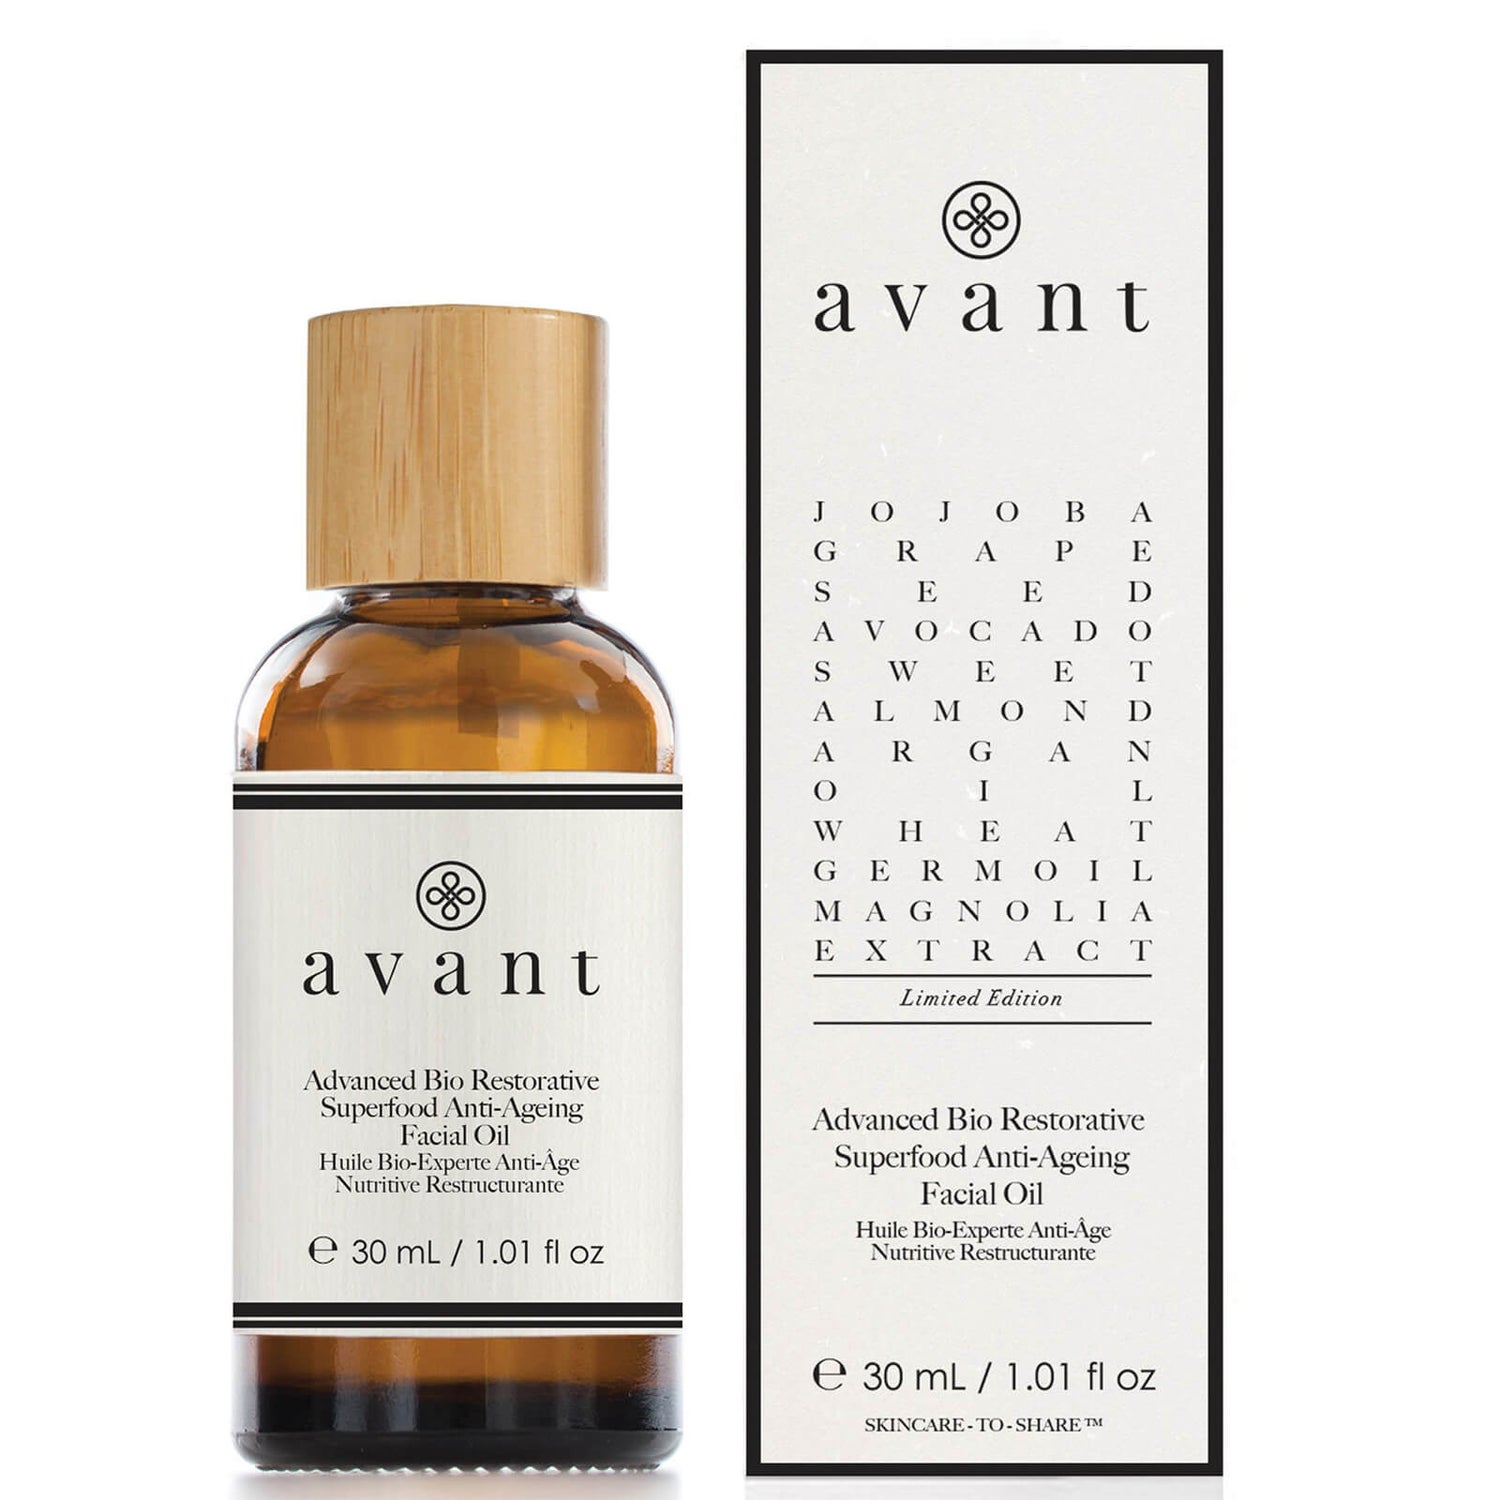 Avant Skincare Limited Edition Advanced Bio Restorative Superfood Facial Oil 30ml